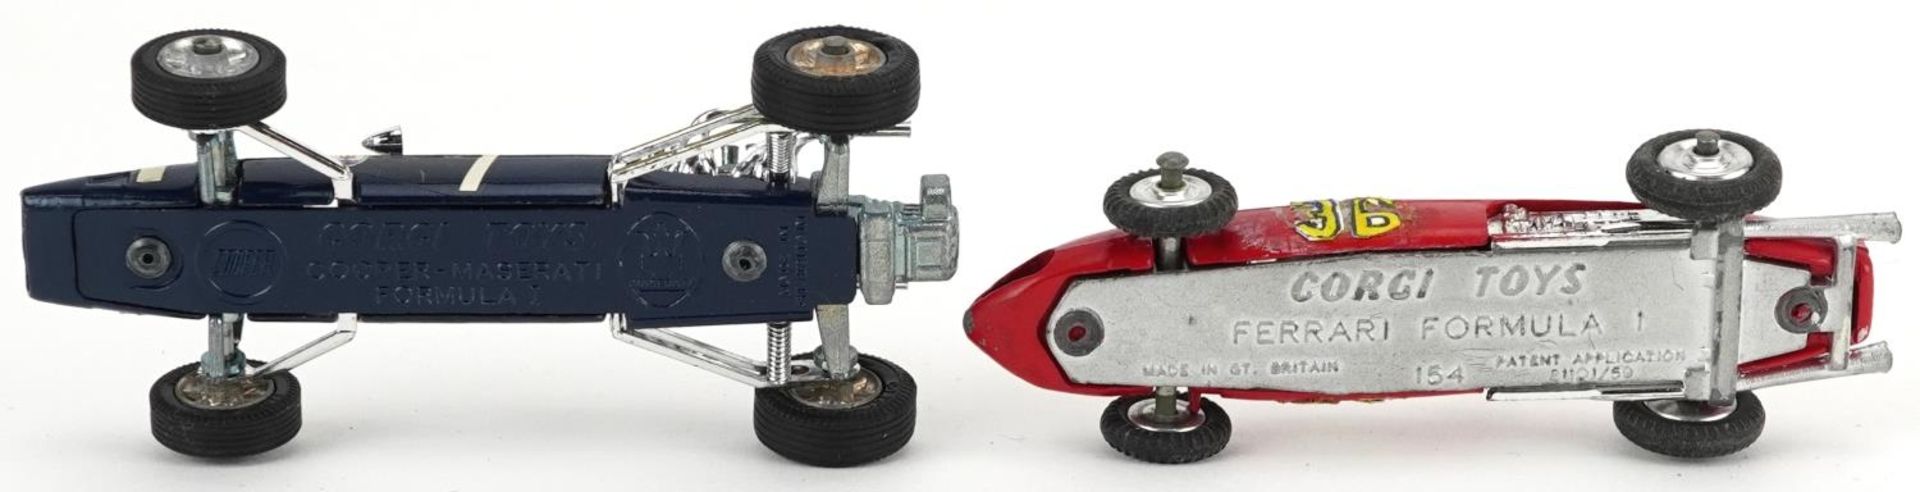 Two vintage Corgi Toys diecast racing vehicles with boxes comprising Ferrari Formula I Grand Prix - Bild 4 aus 4